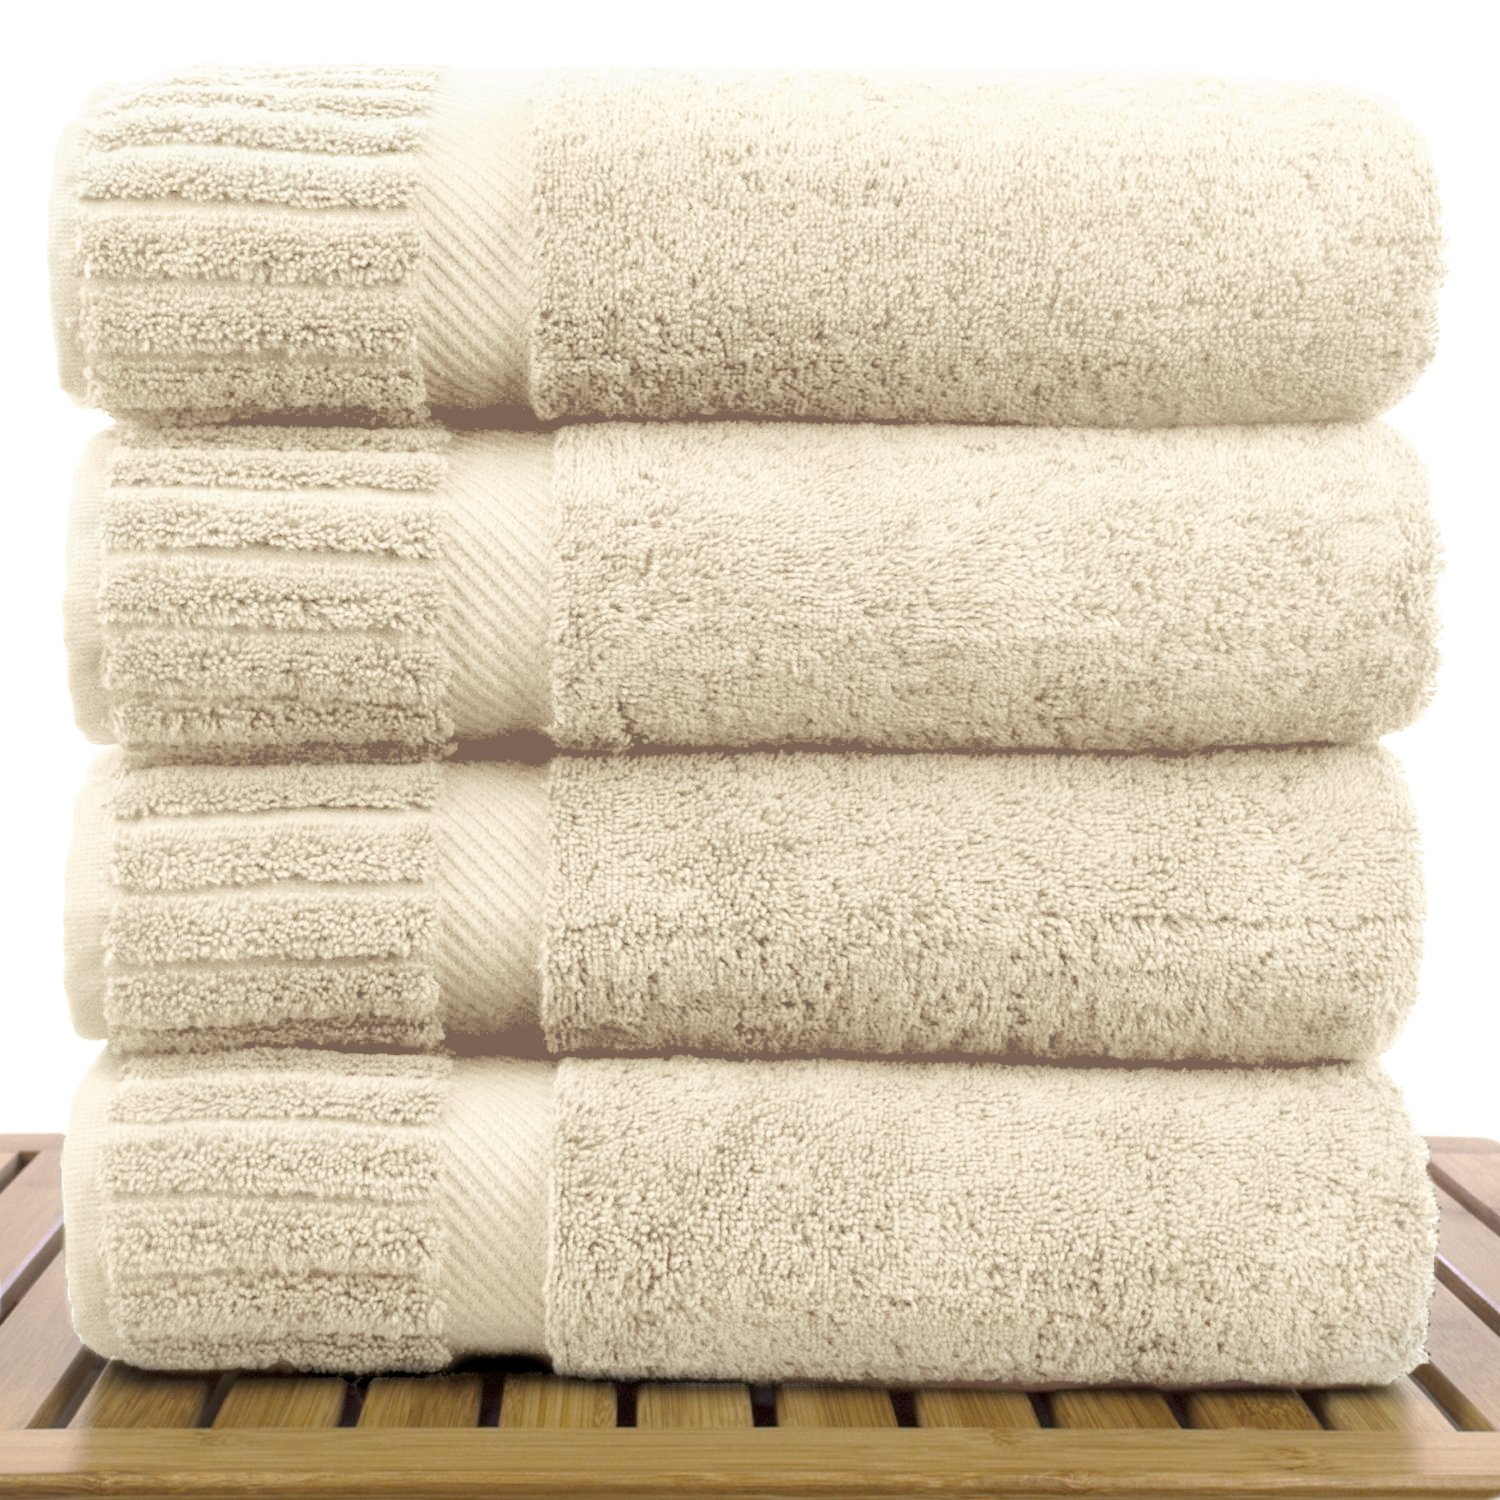 30" x 58" - 18 lbs/doz - %100 Turkish Cotton Beige Bath Towel - Piano Border-Robemart.com